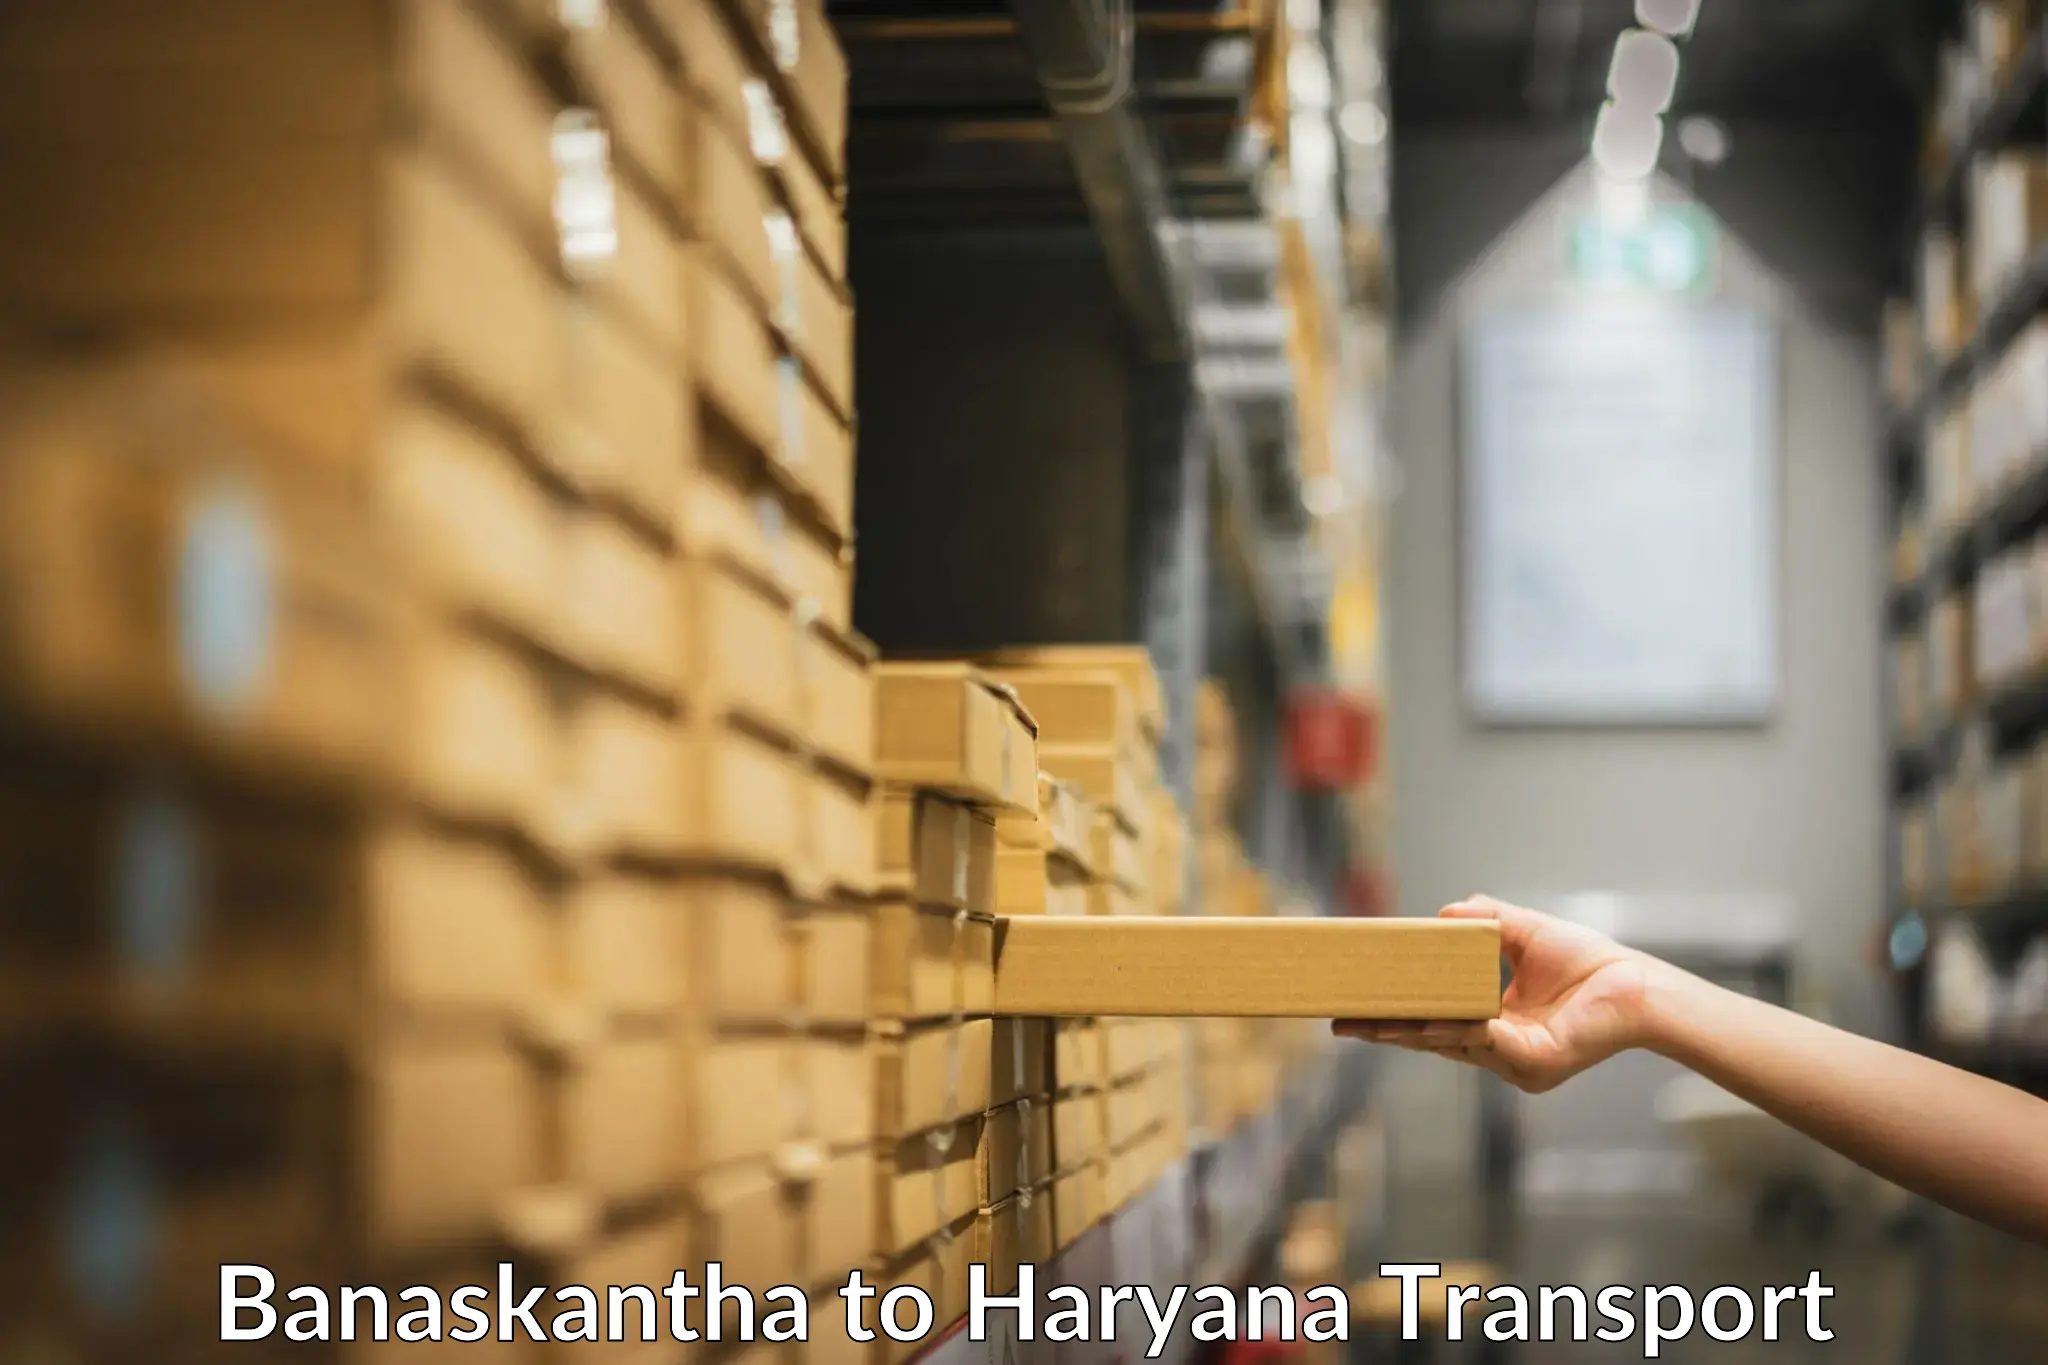 Furniture transport service Banaskantha to Bilaspur Haryana